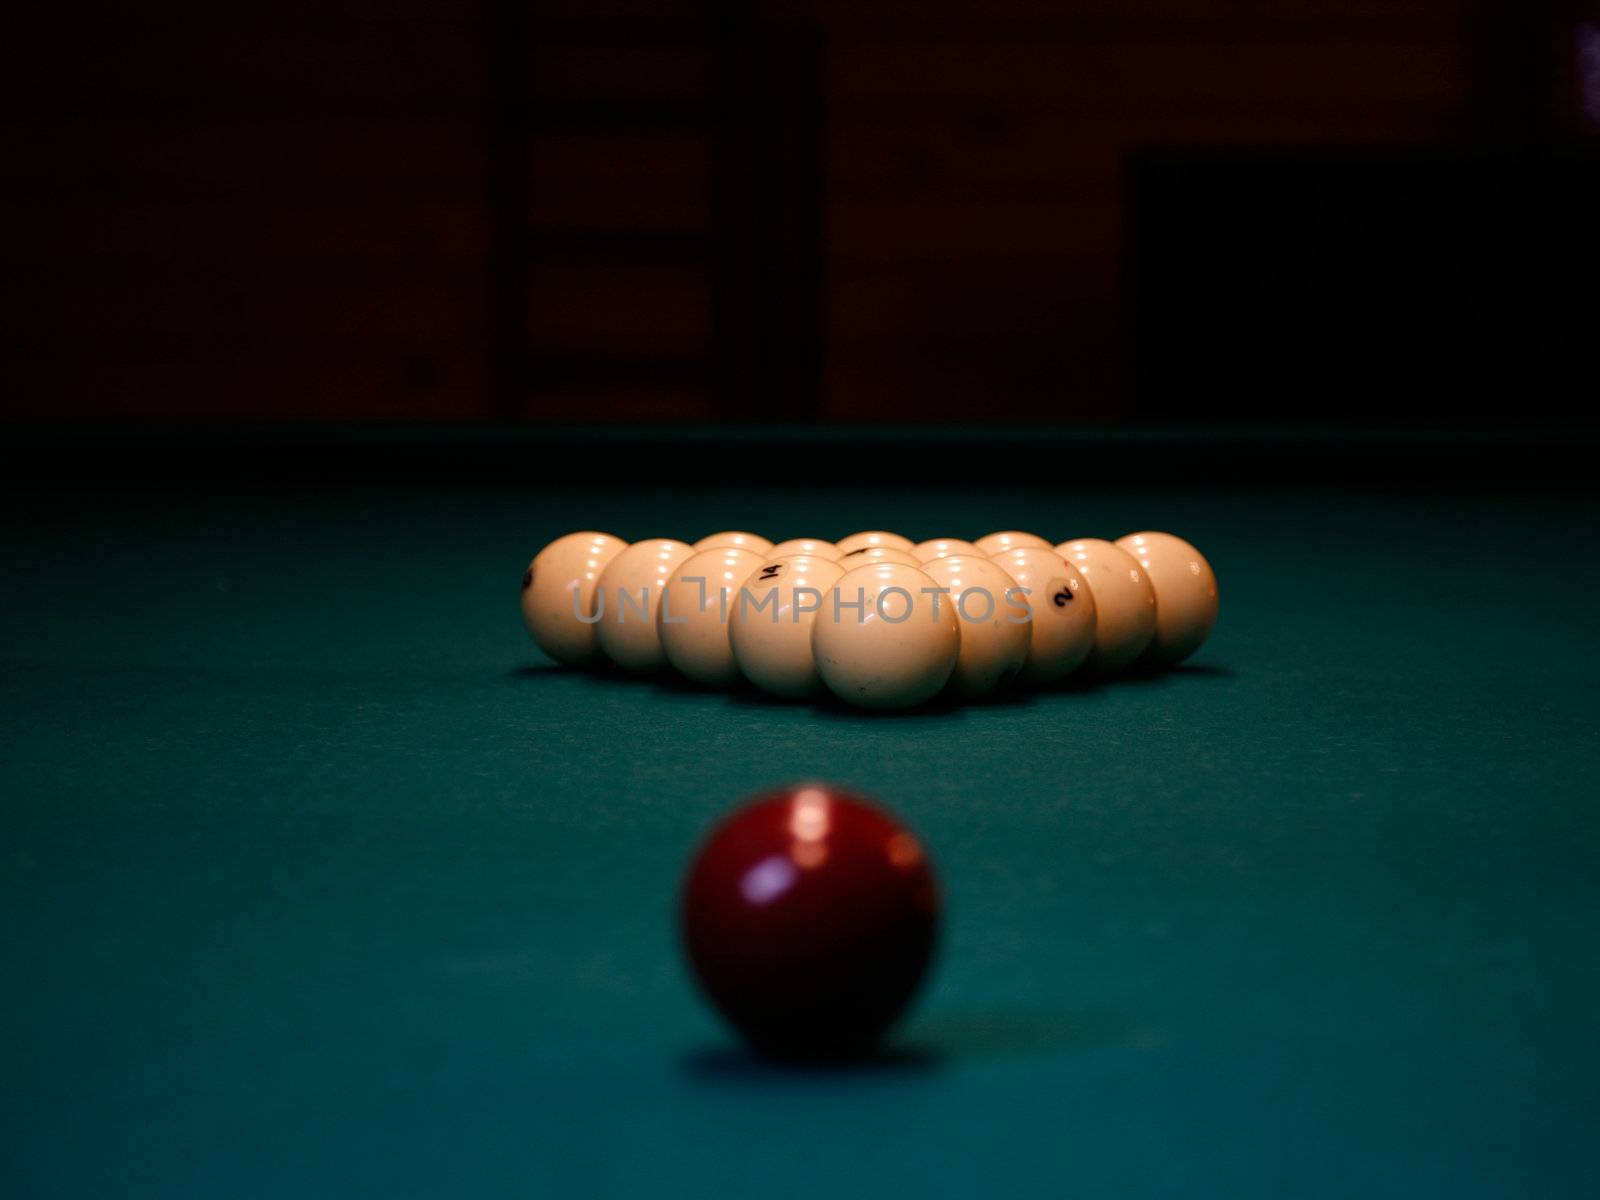 A pool balls